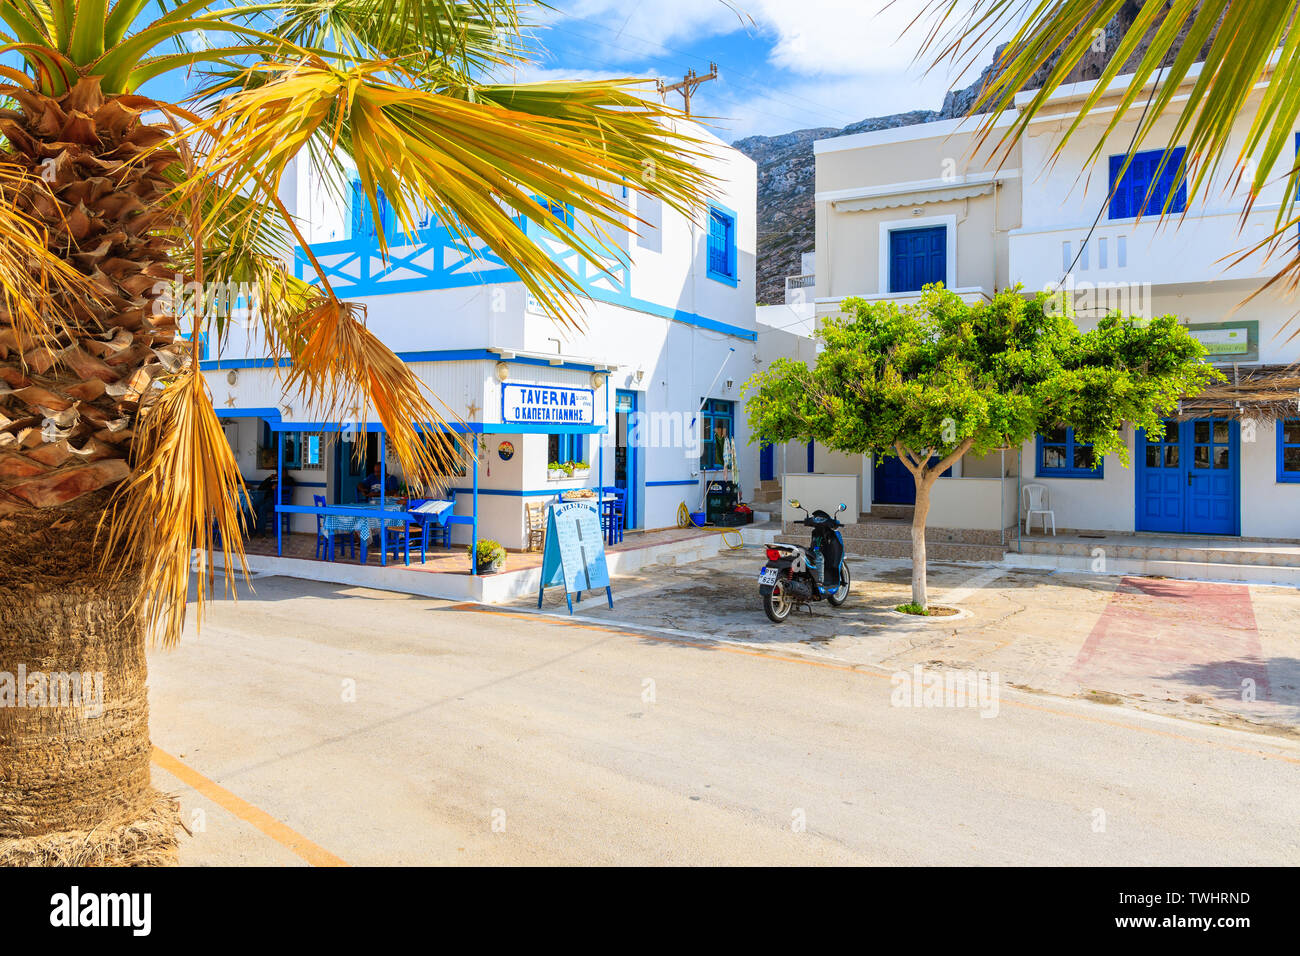 FINIKI PORTA, isola di Karpathos - Sep 30, 2018: tipica taverna greca sulla strada di Finiki village, Karpathos Island, Grecia. Foto Stock